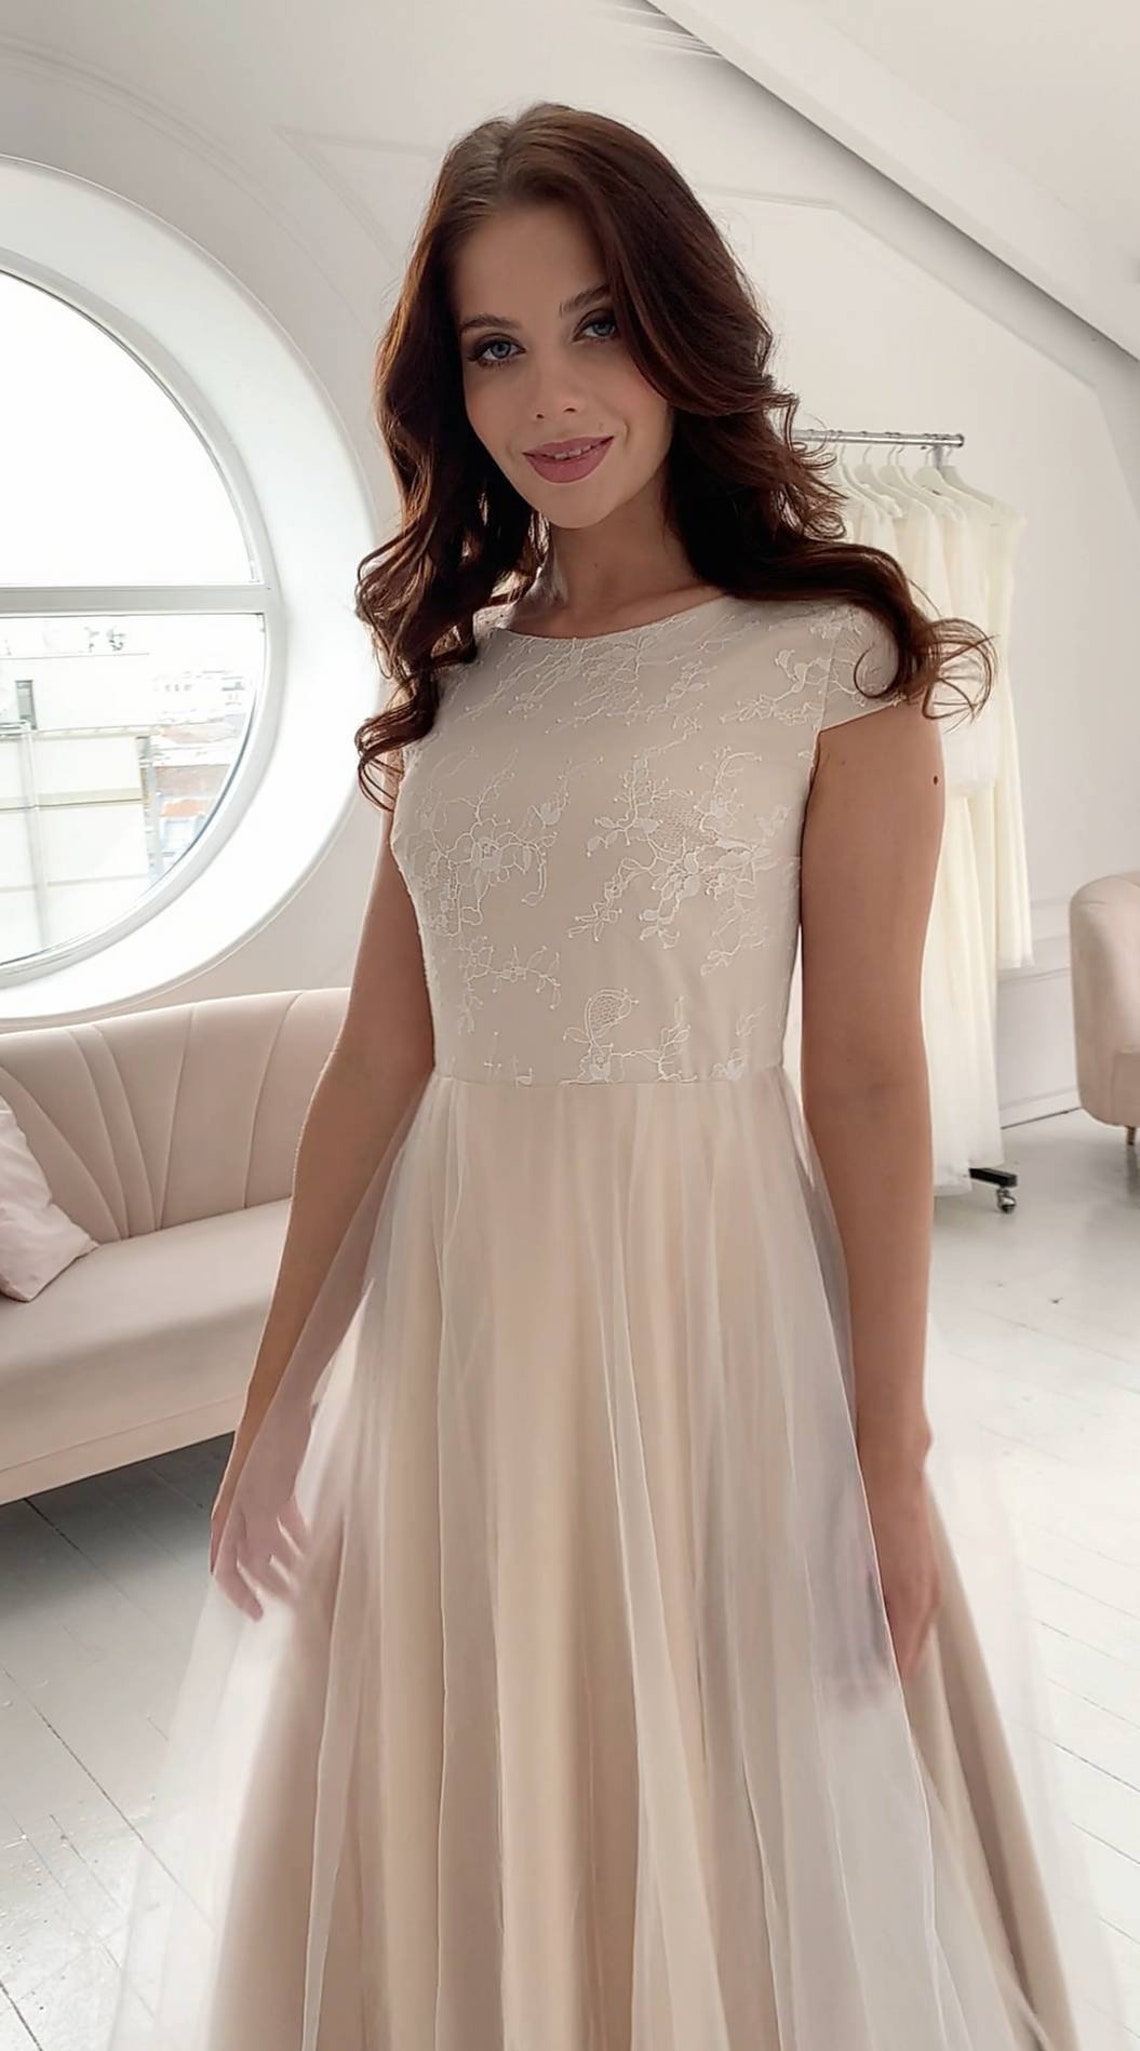 LACE simple colored wedding dress modest modern elegant | Etsy